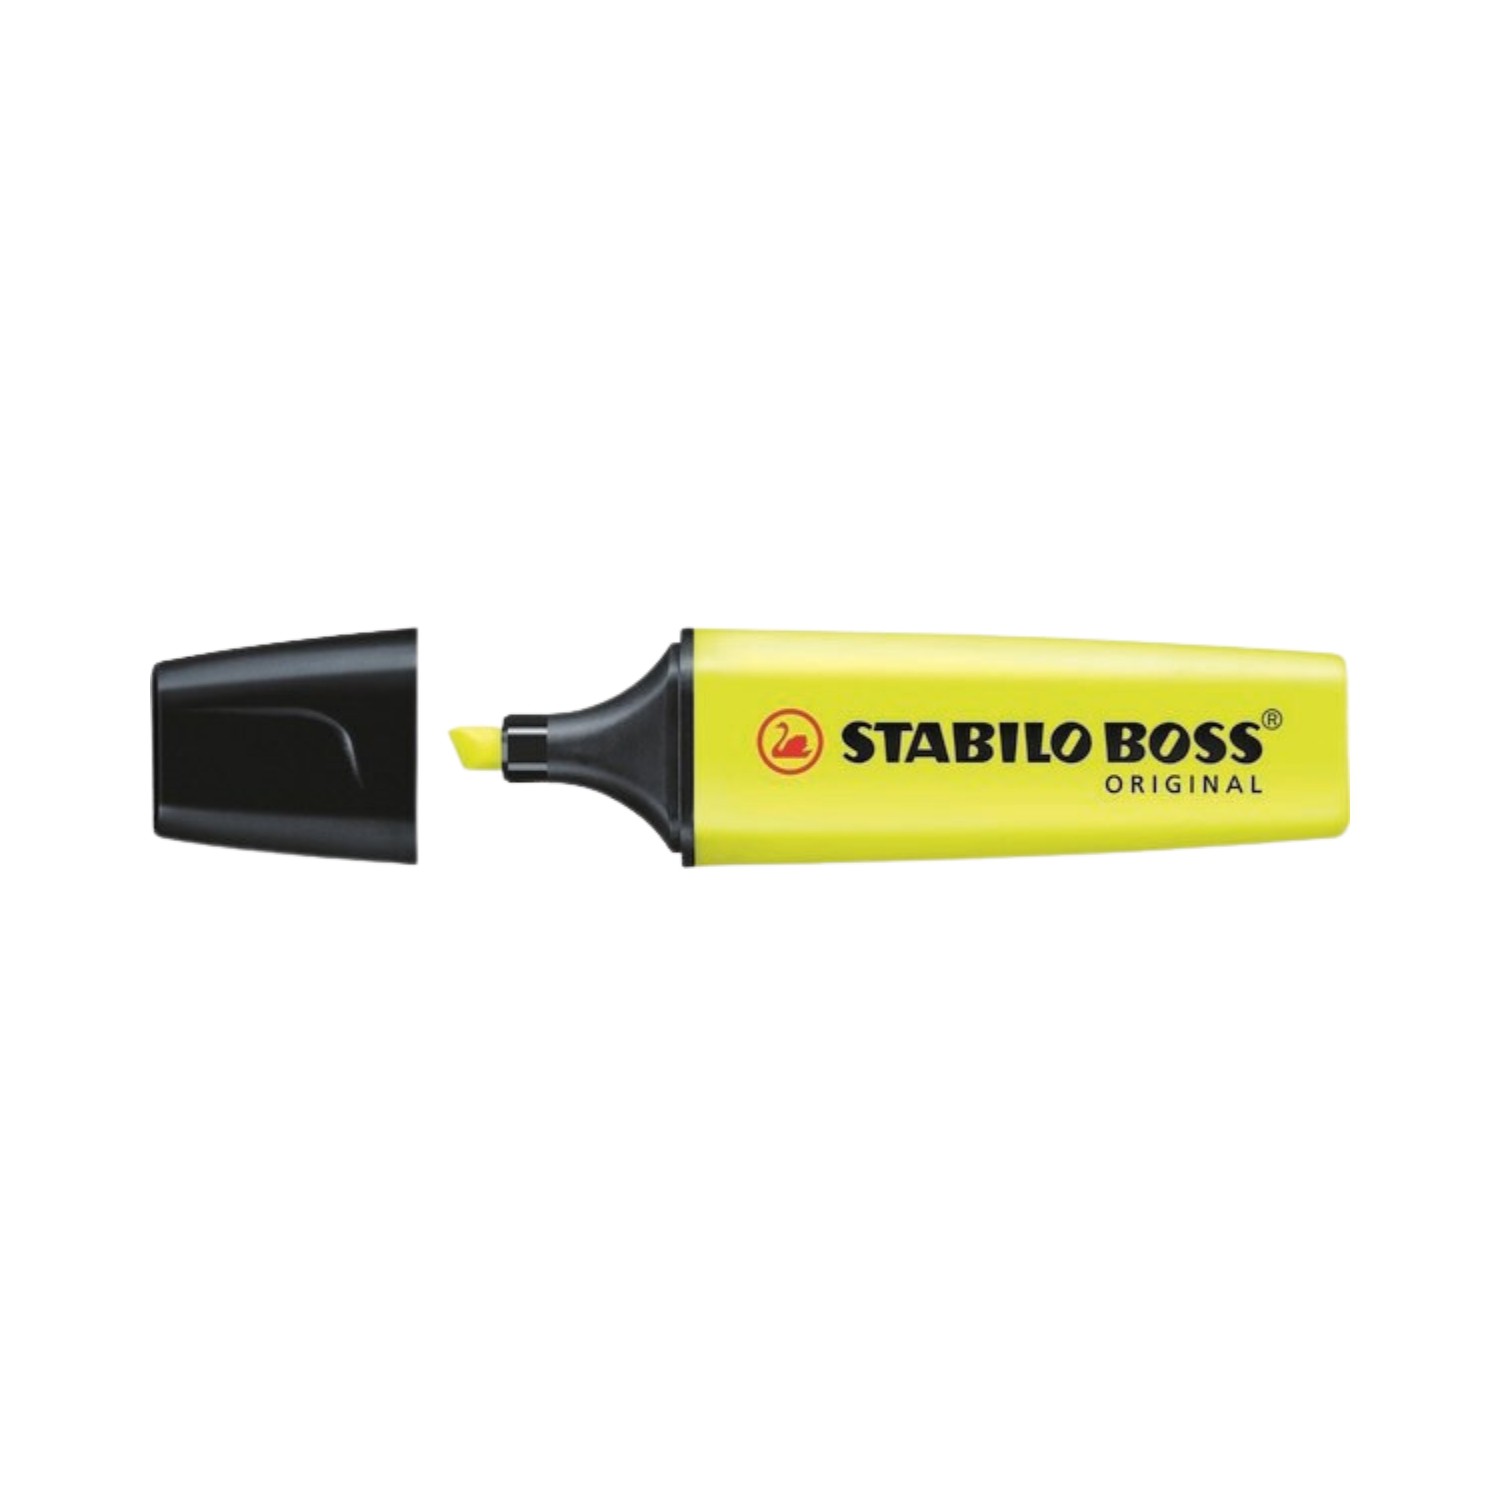 Stabilo+Boss+Original+Highlighter+Yellow